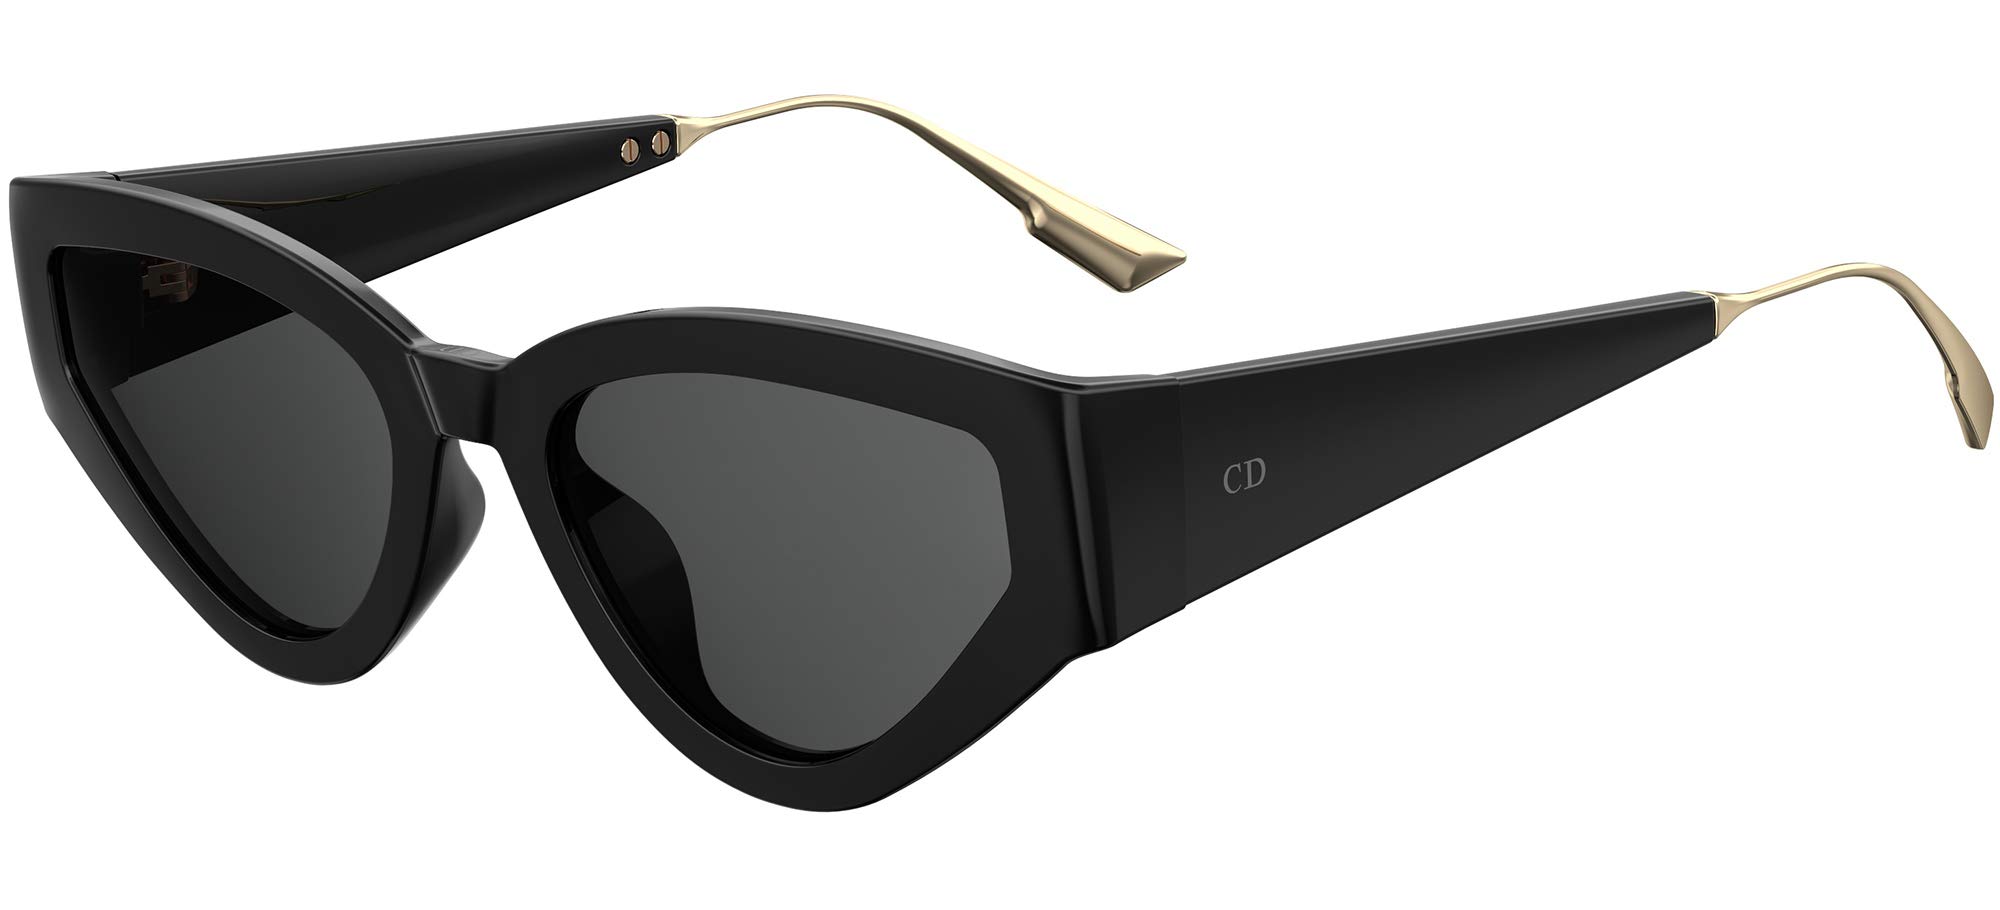 Dior cat eye sunglasses Womens Fashion Watches  Accessories Sunglasses   Eyewear on Carousell